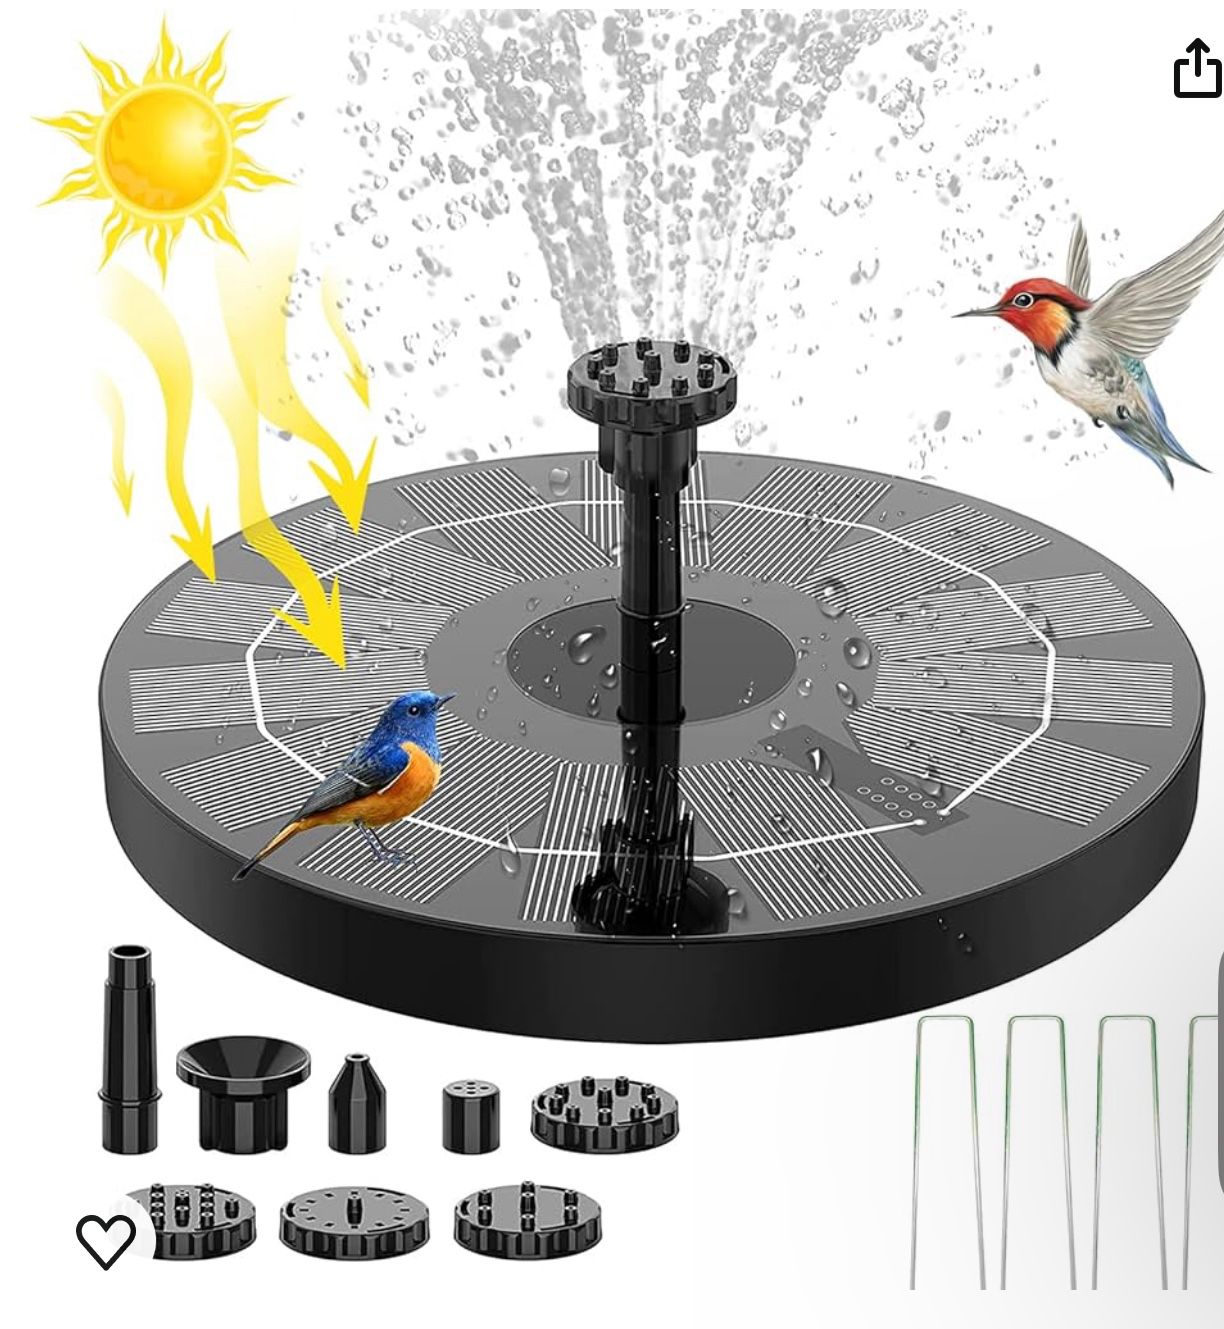 Solar Powered Water Fountain Pump with 8 Nozzles, Solar Birdbath Floating Fountain for Garden